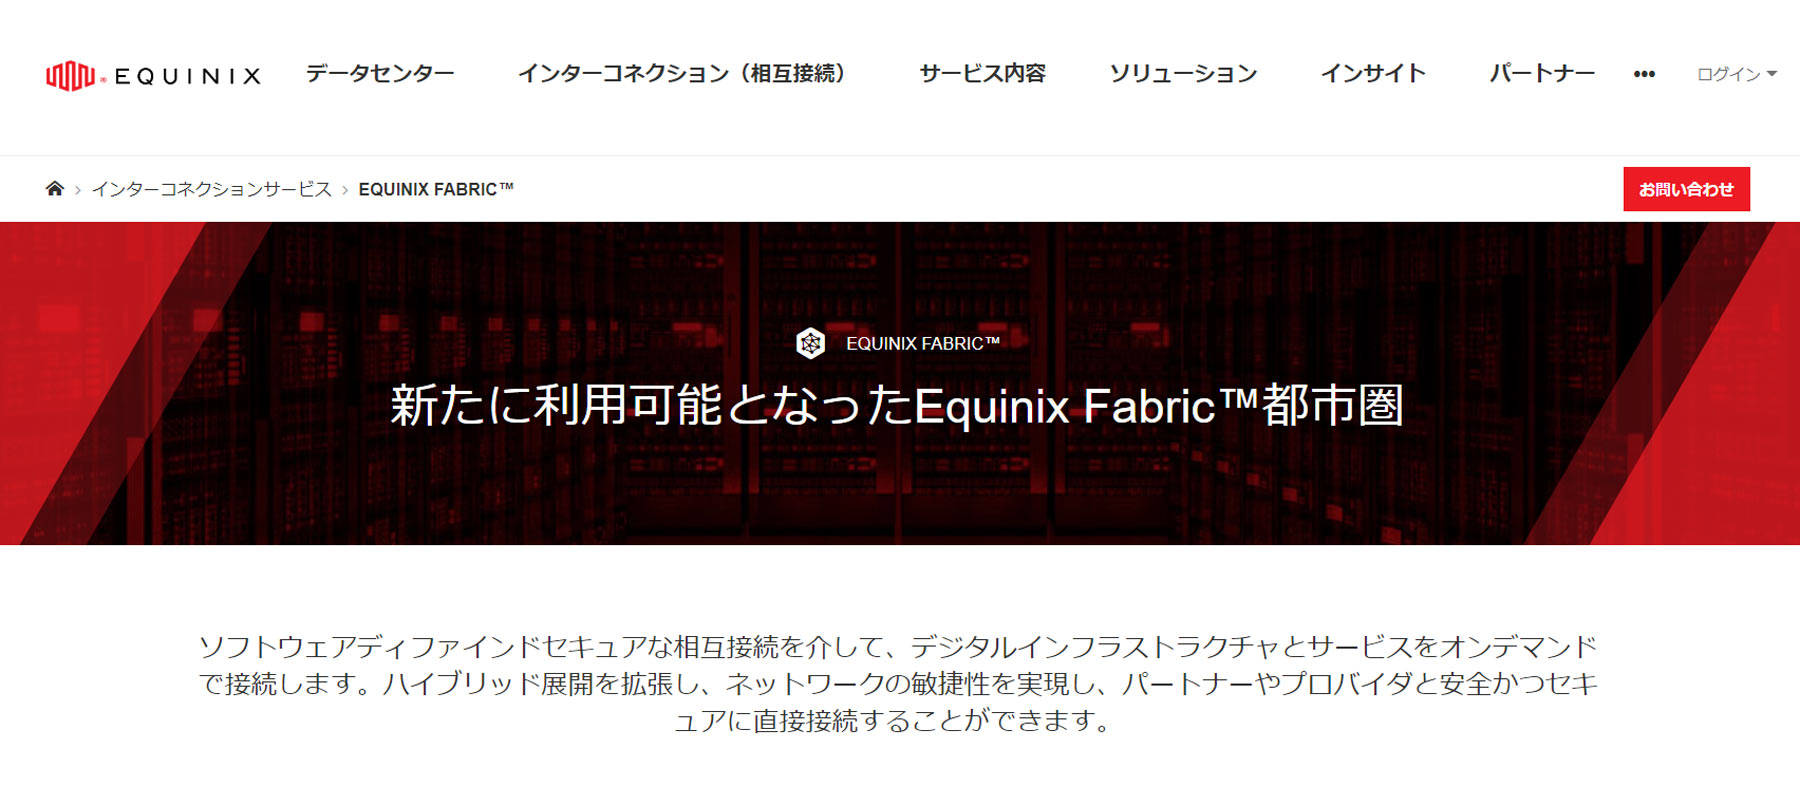 Equinix Fabric公式Webサイト